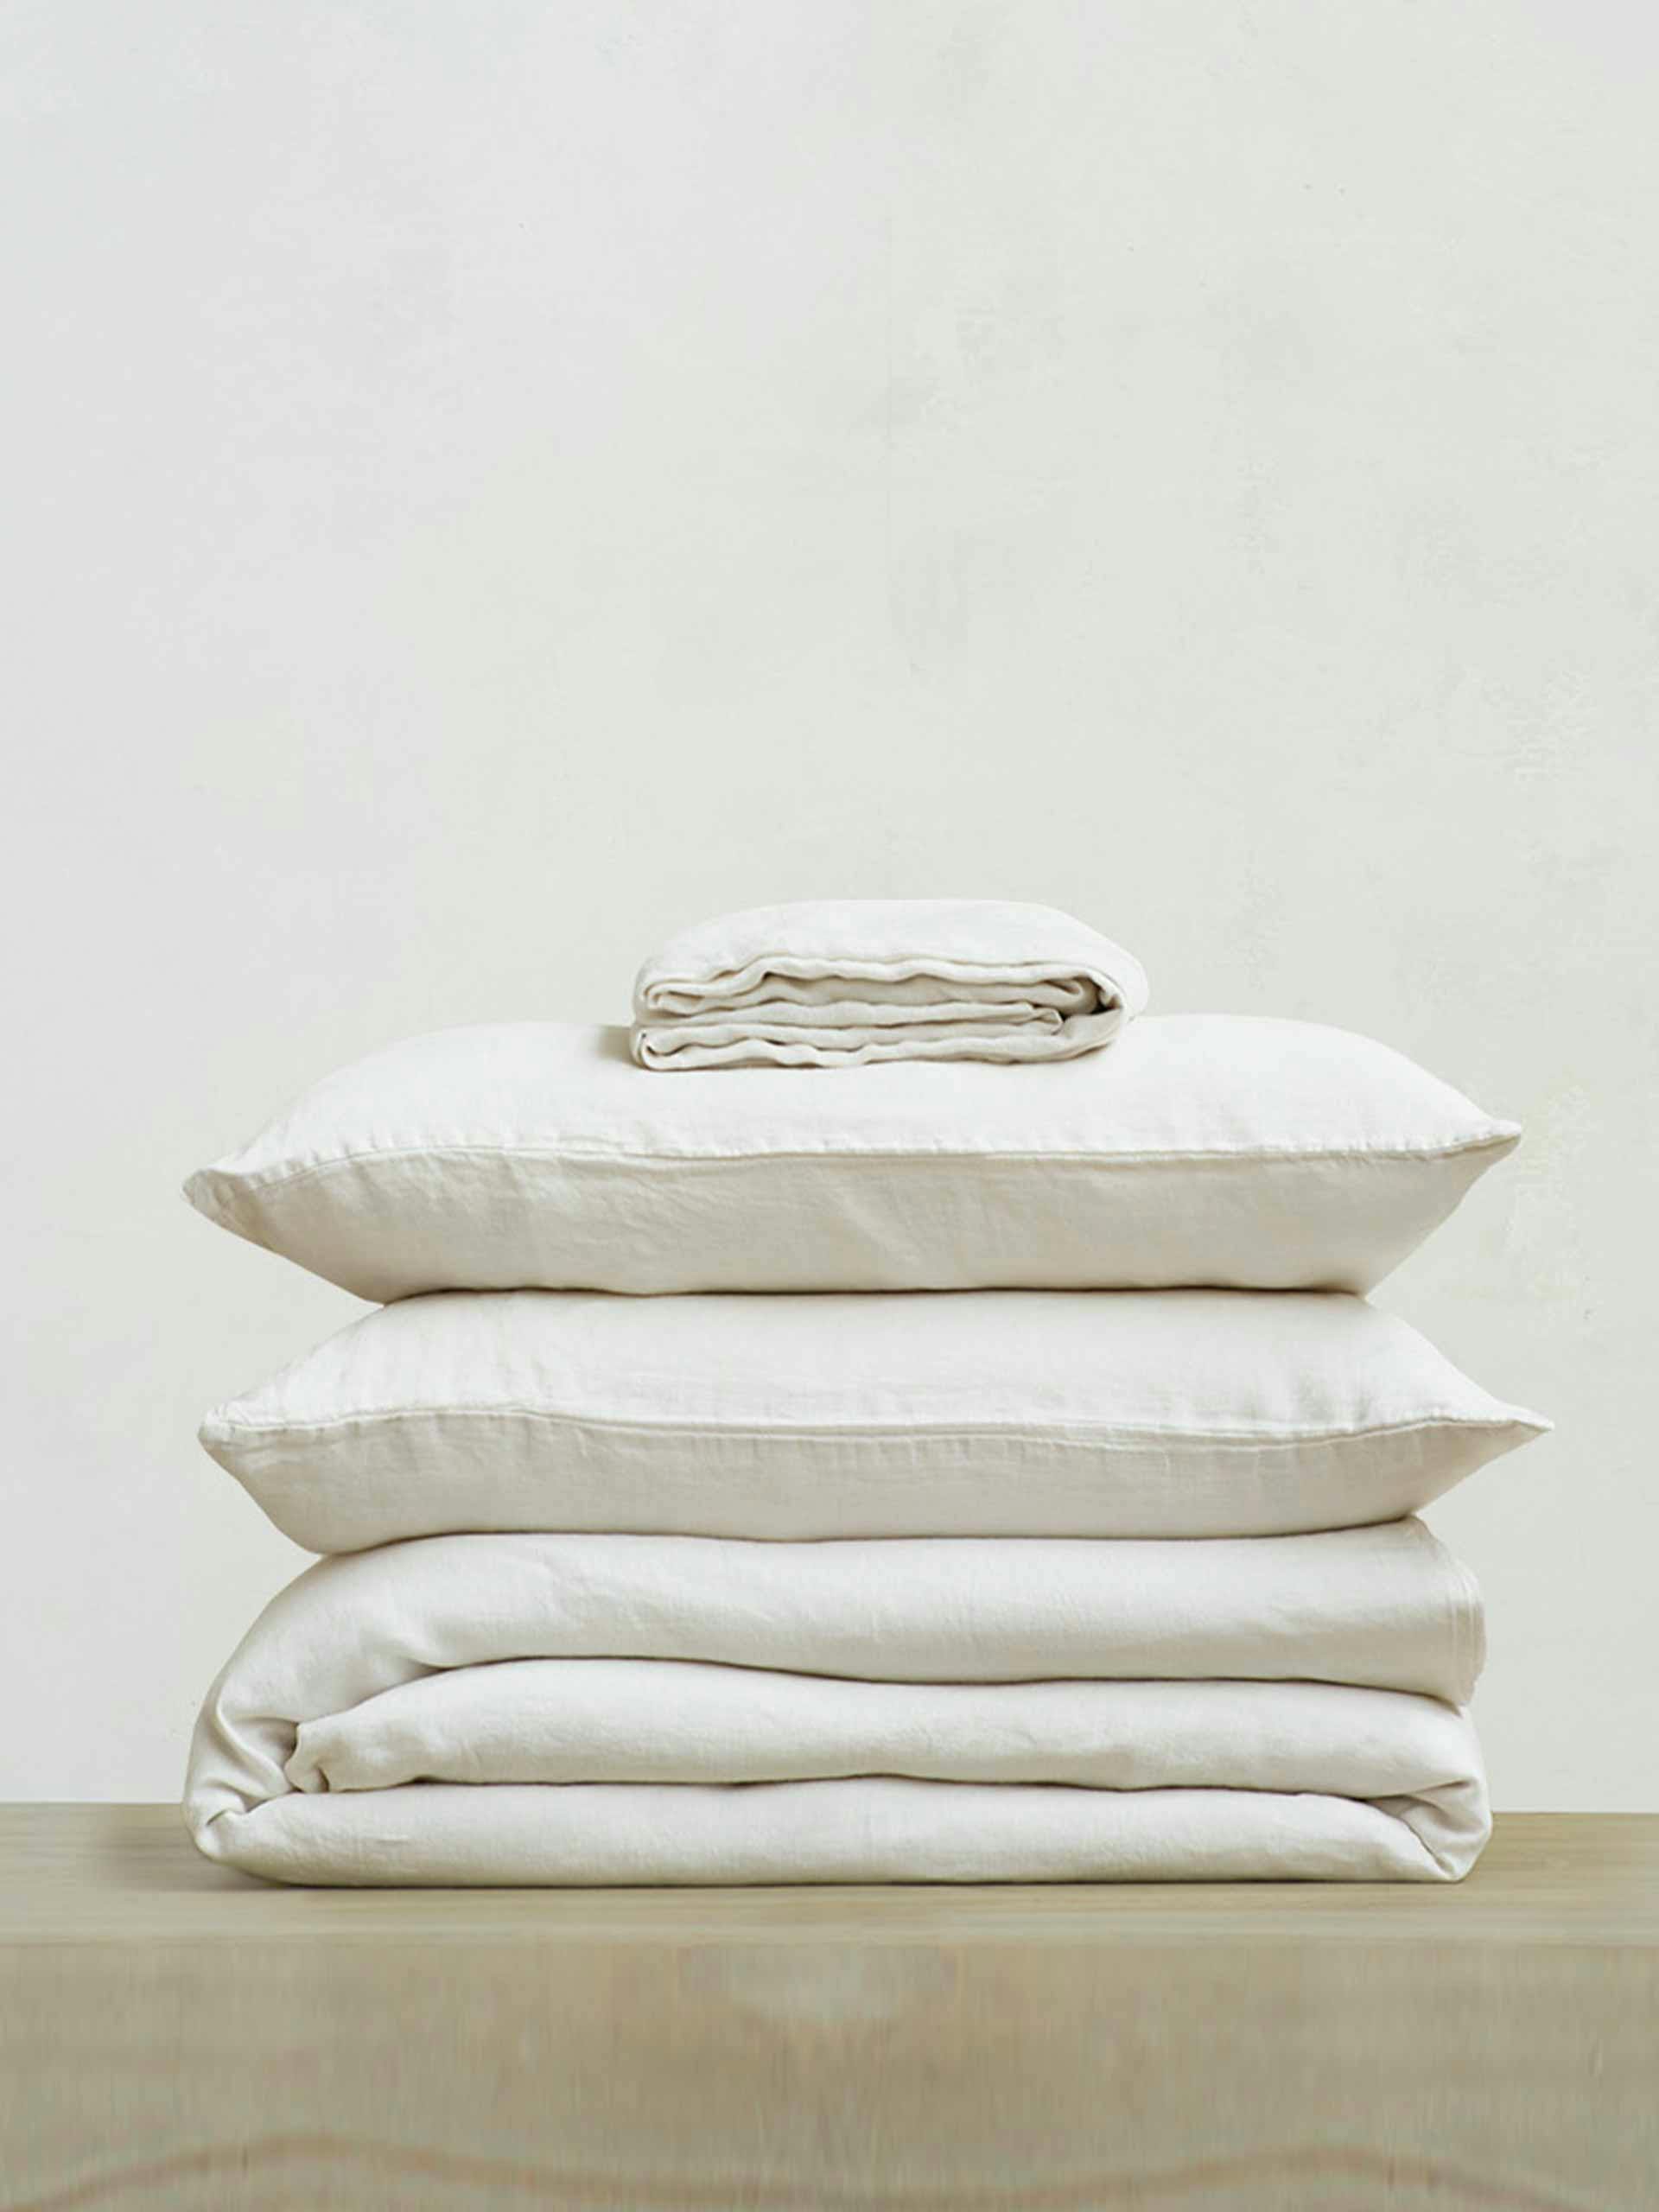 Cream linen sheets